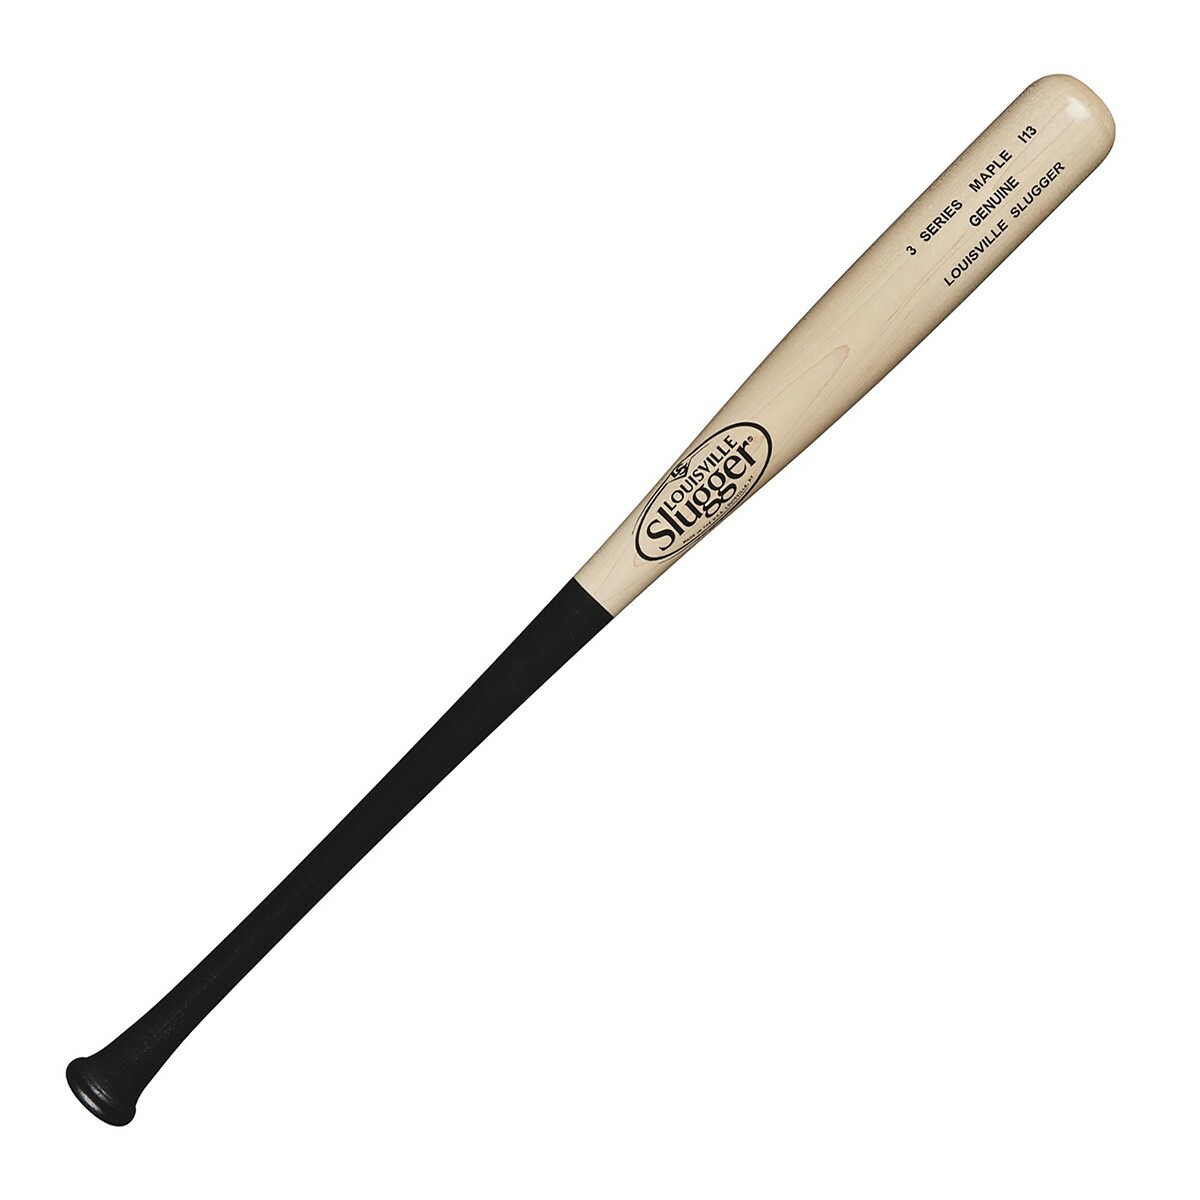 Louisville Slugger Series 3 I13 Maple Baseball Bat | eBay